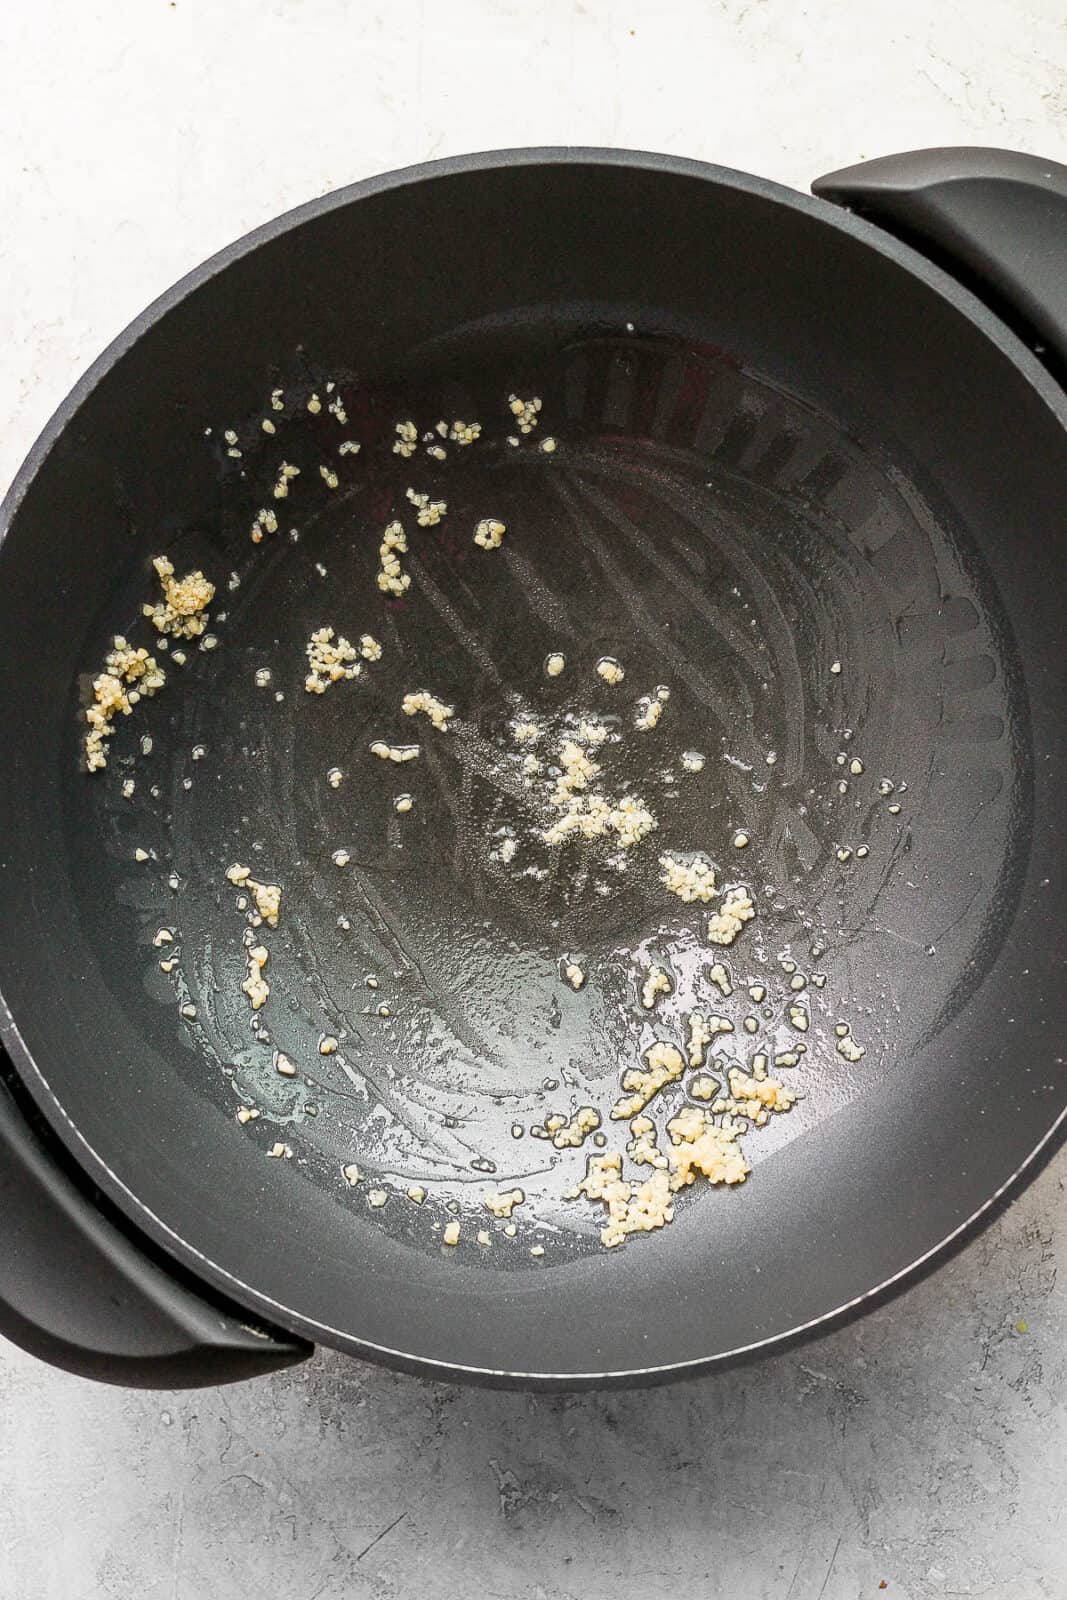 Garlic sautéing in a wok.